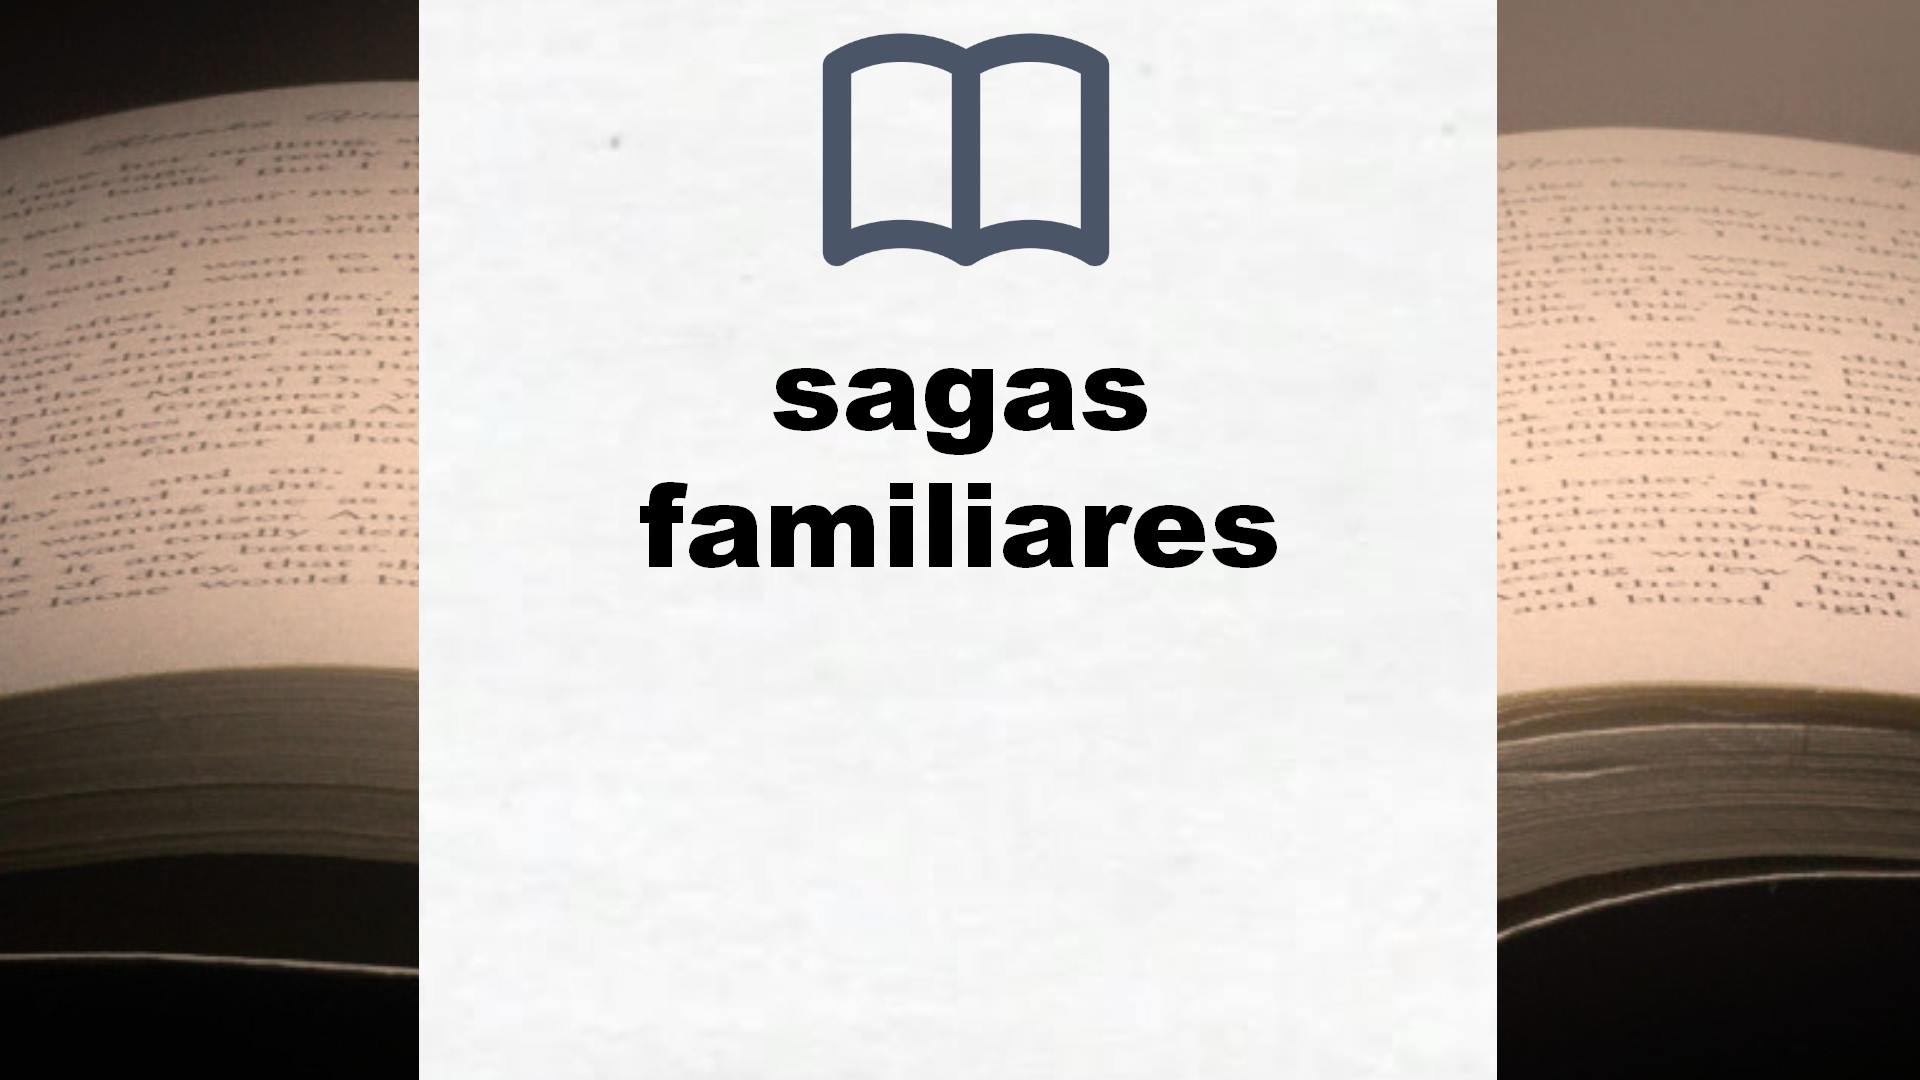 Libros sobre sagas familiares